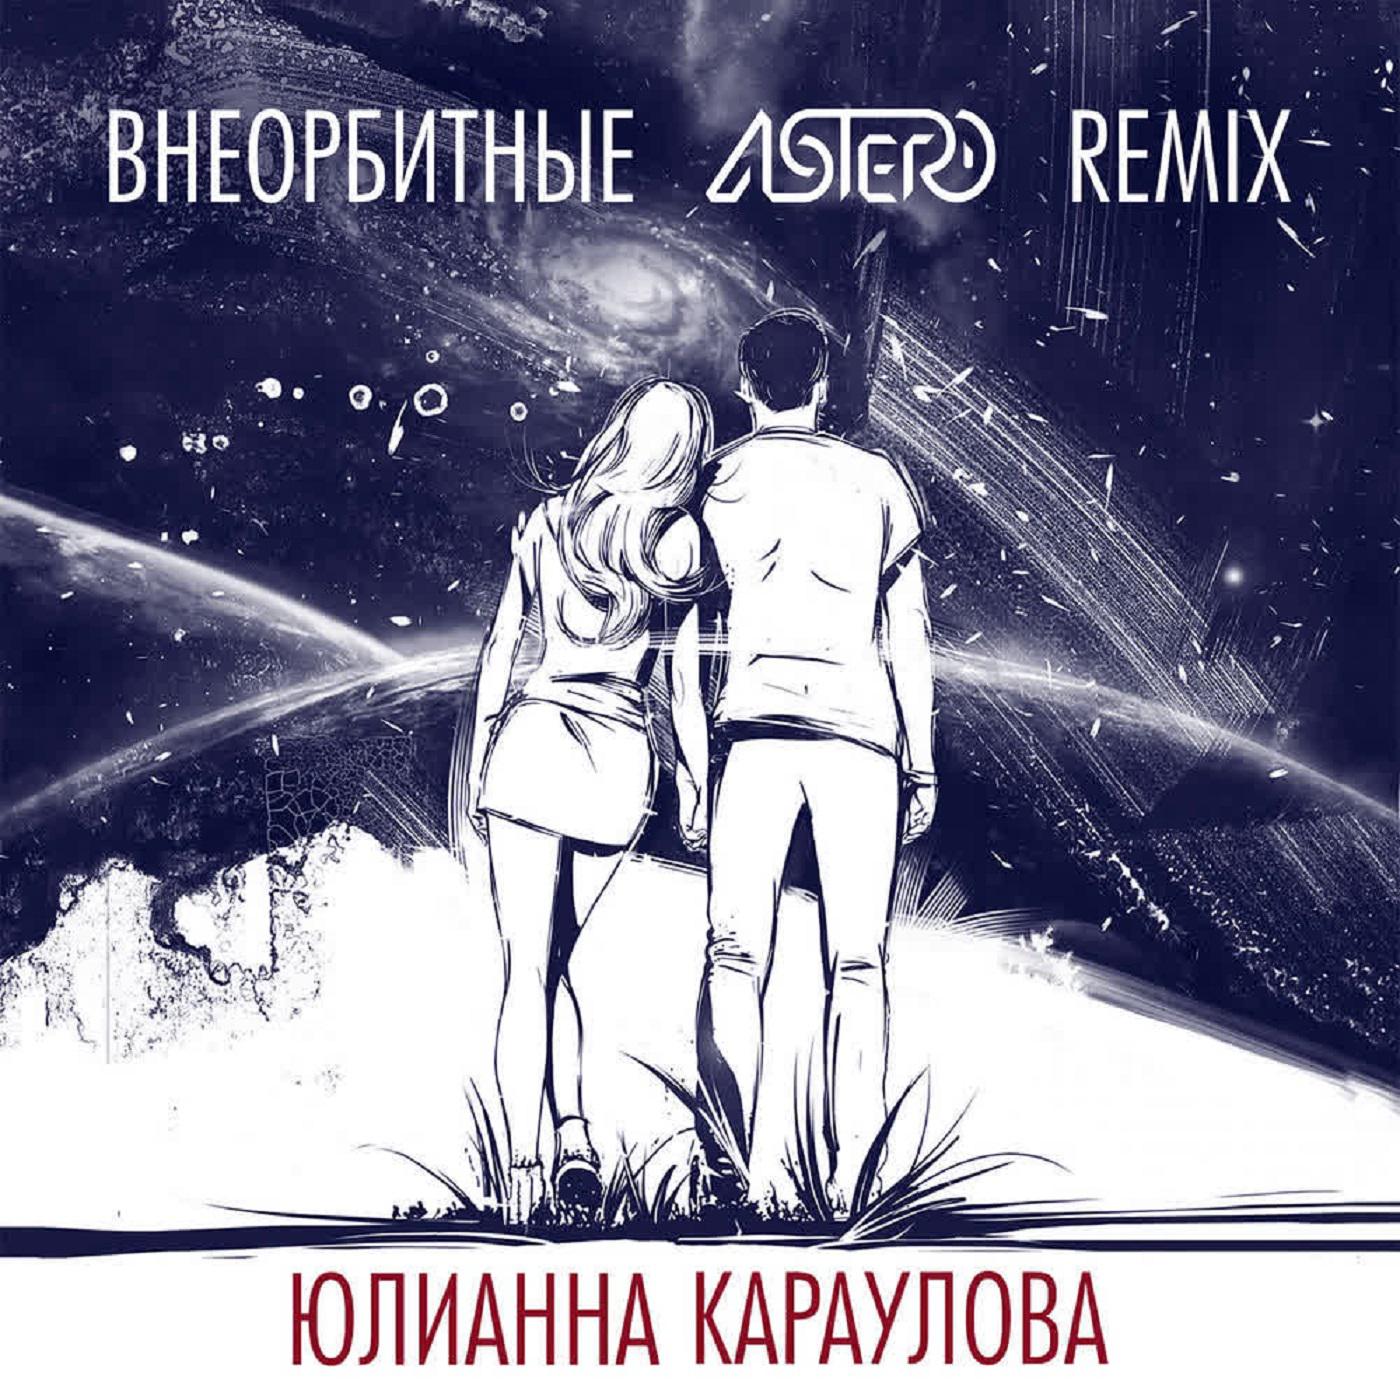 Юлианна Караулова - Внеорбитные (Astero Remix)